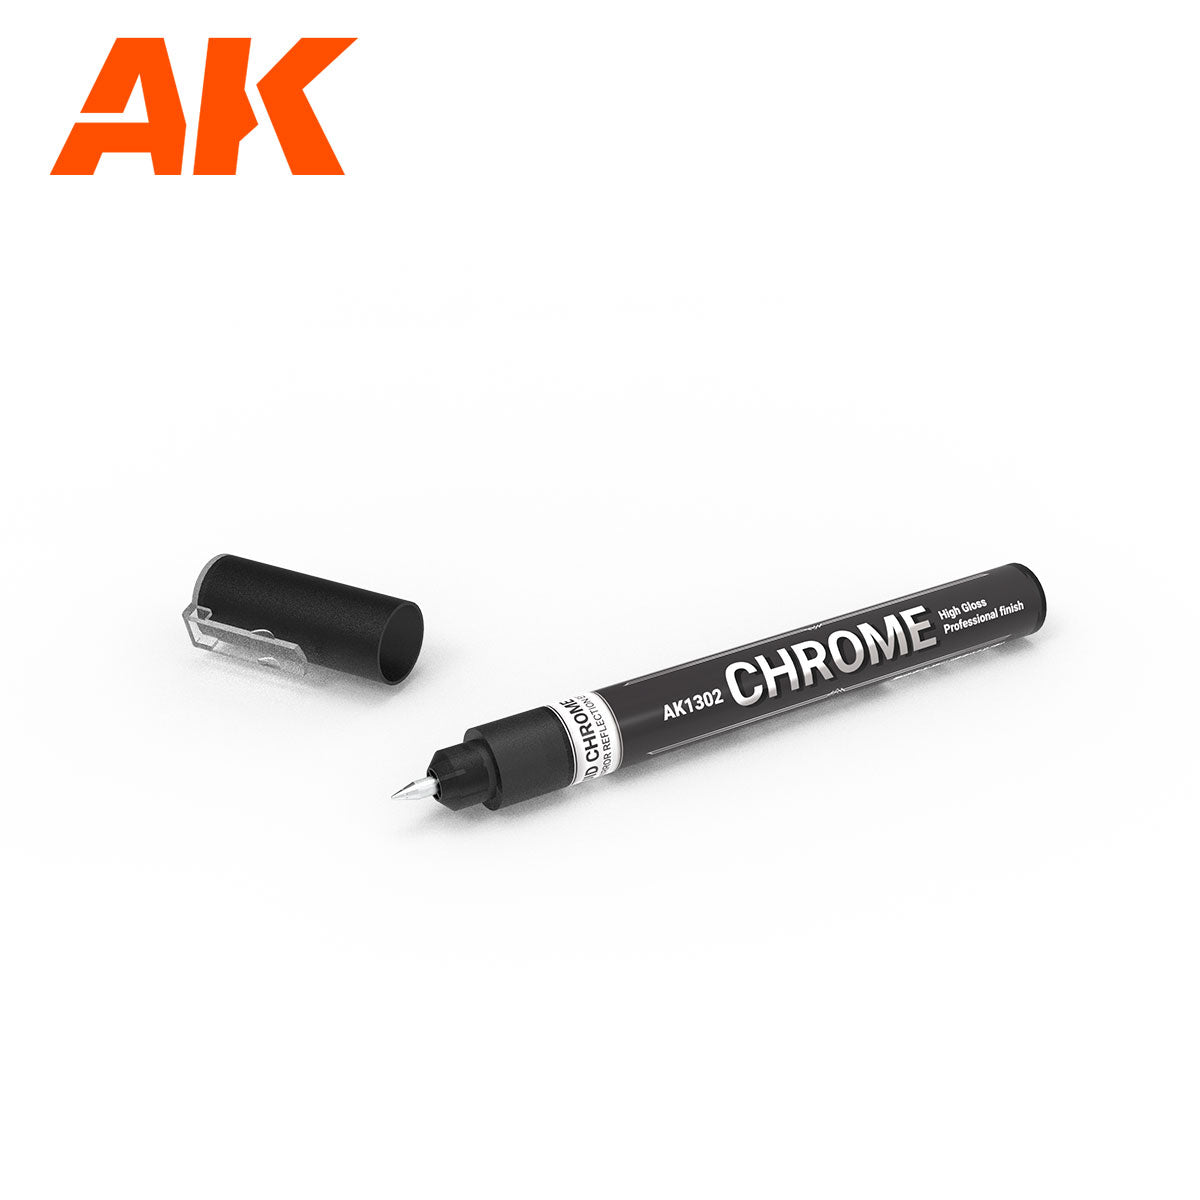 AK1302 - Metallic Liquid Marker - Chrome